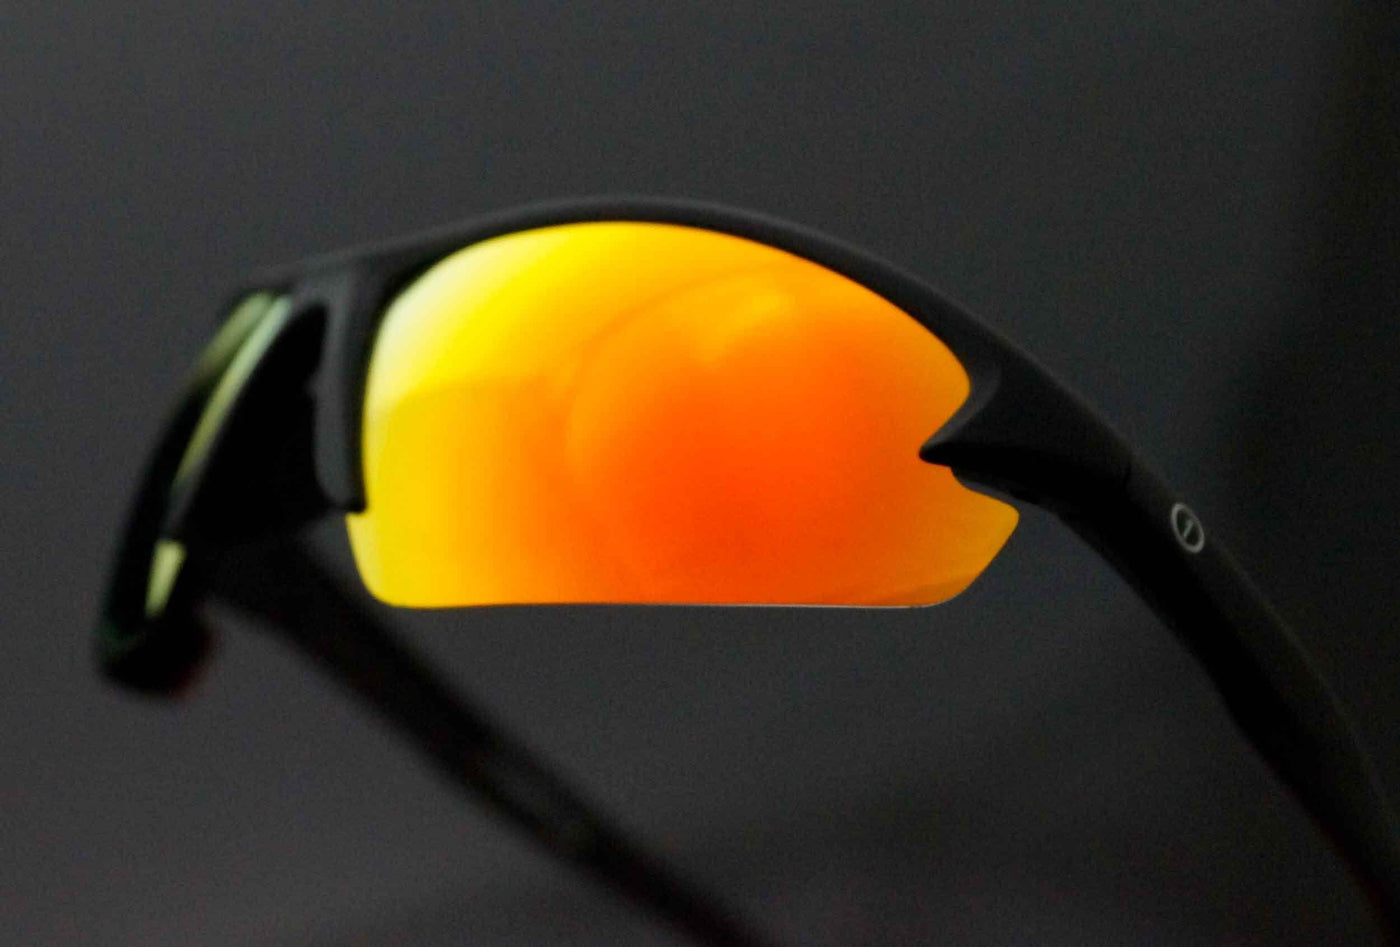 One Iron Golf Polarized Sunglasses in Orange